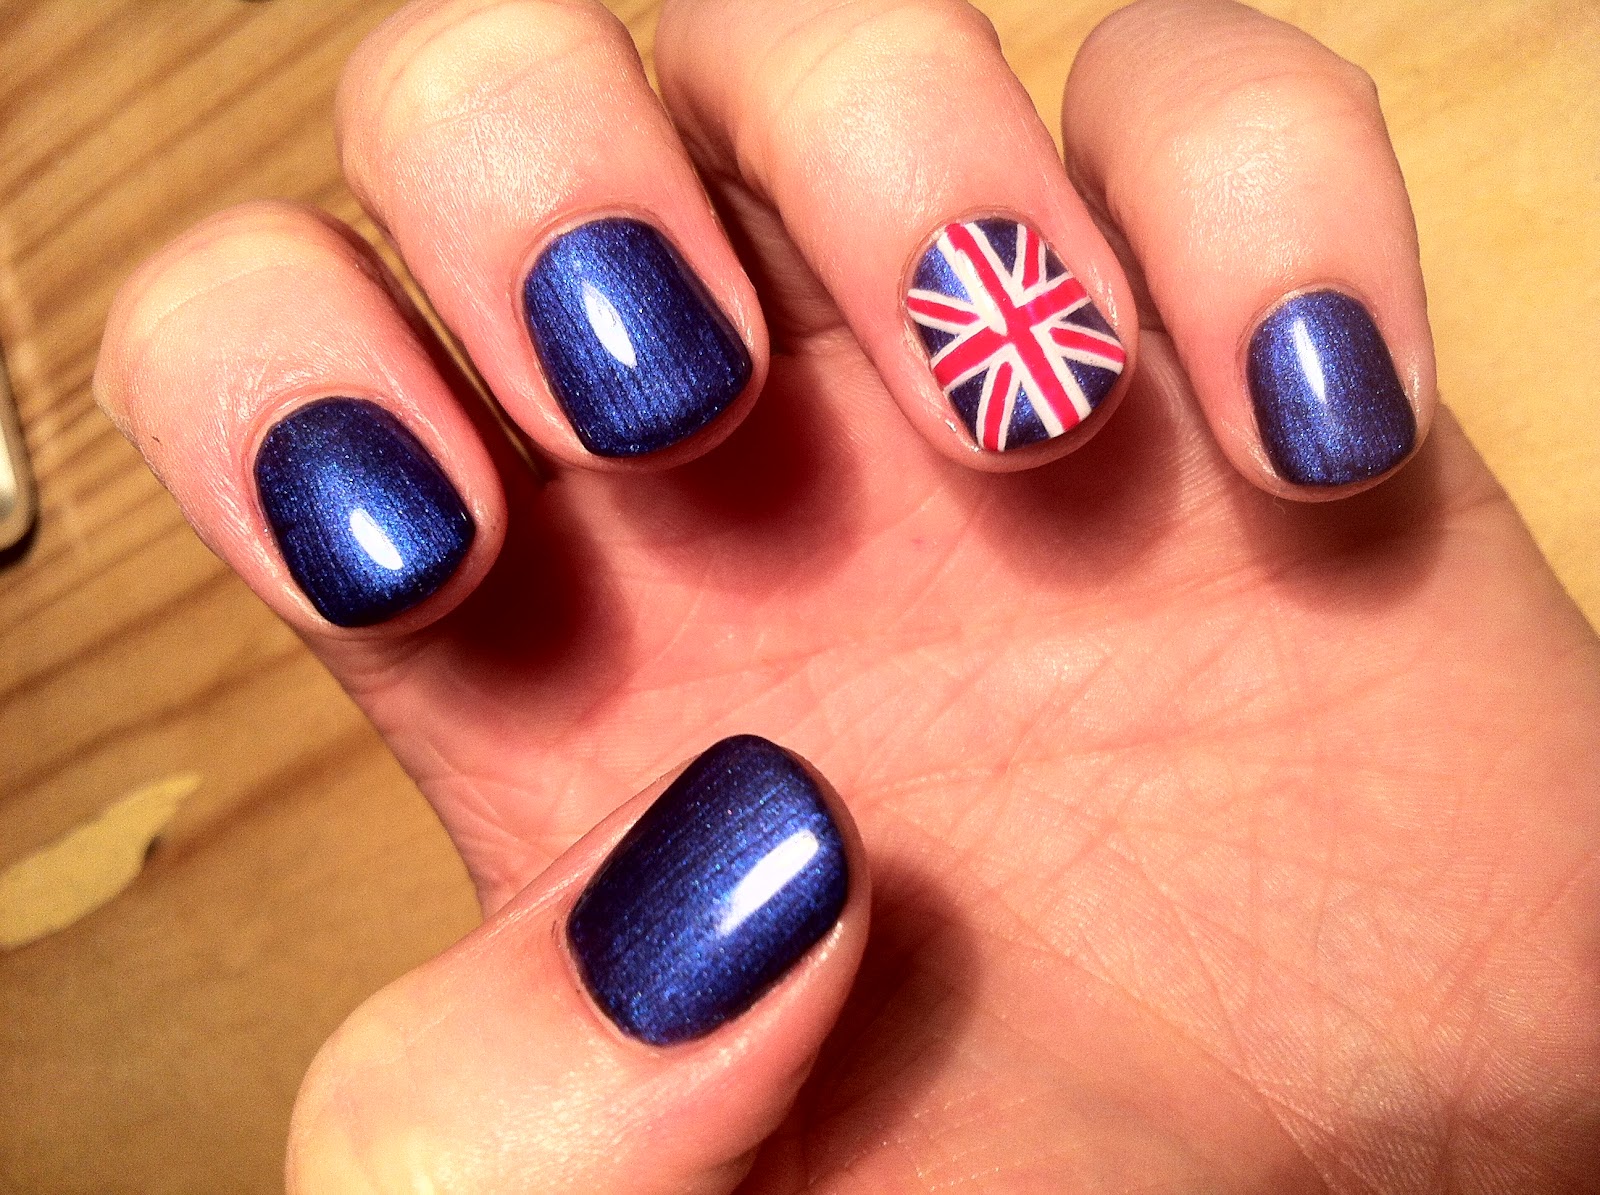 Ногти дизайн флаг. Британский флаг на ногтях. Маникюр с британским флагом. Ногти Триколор. Маникюр с флагом России.